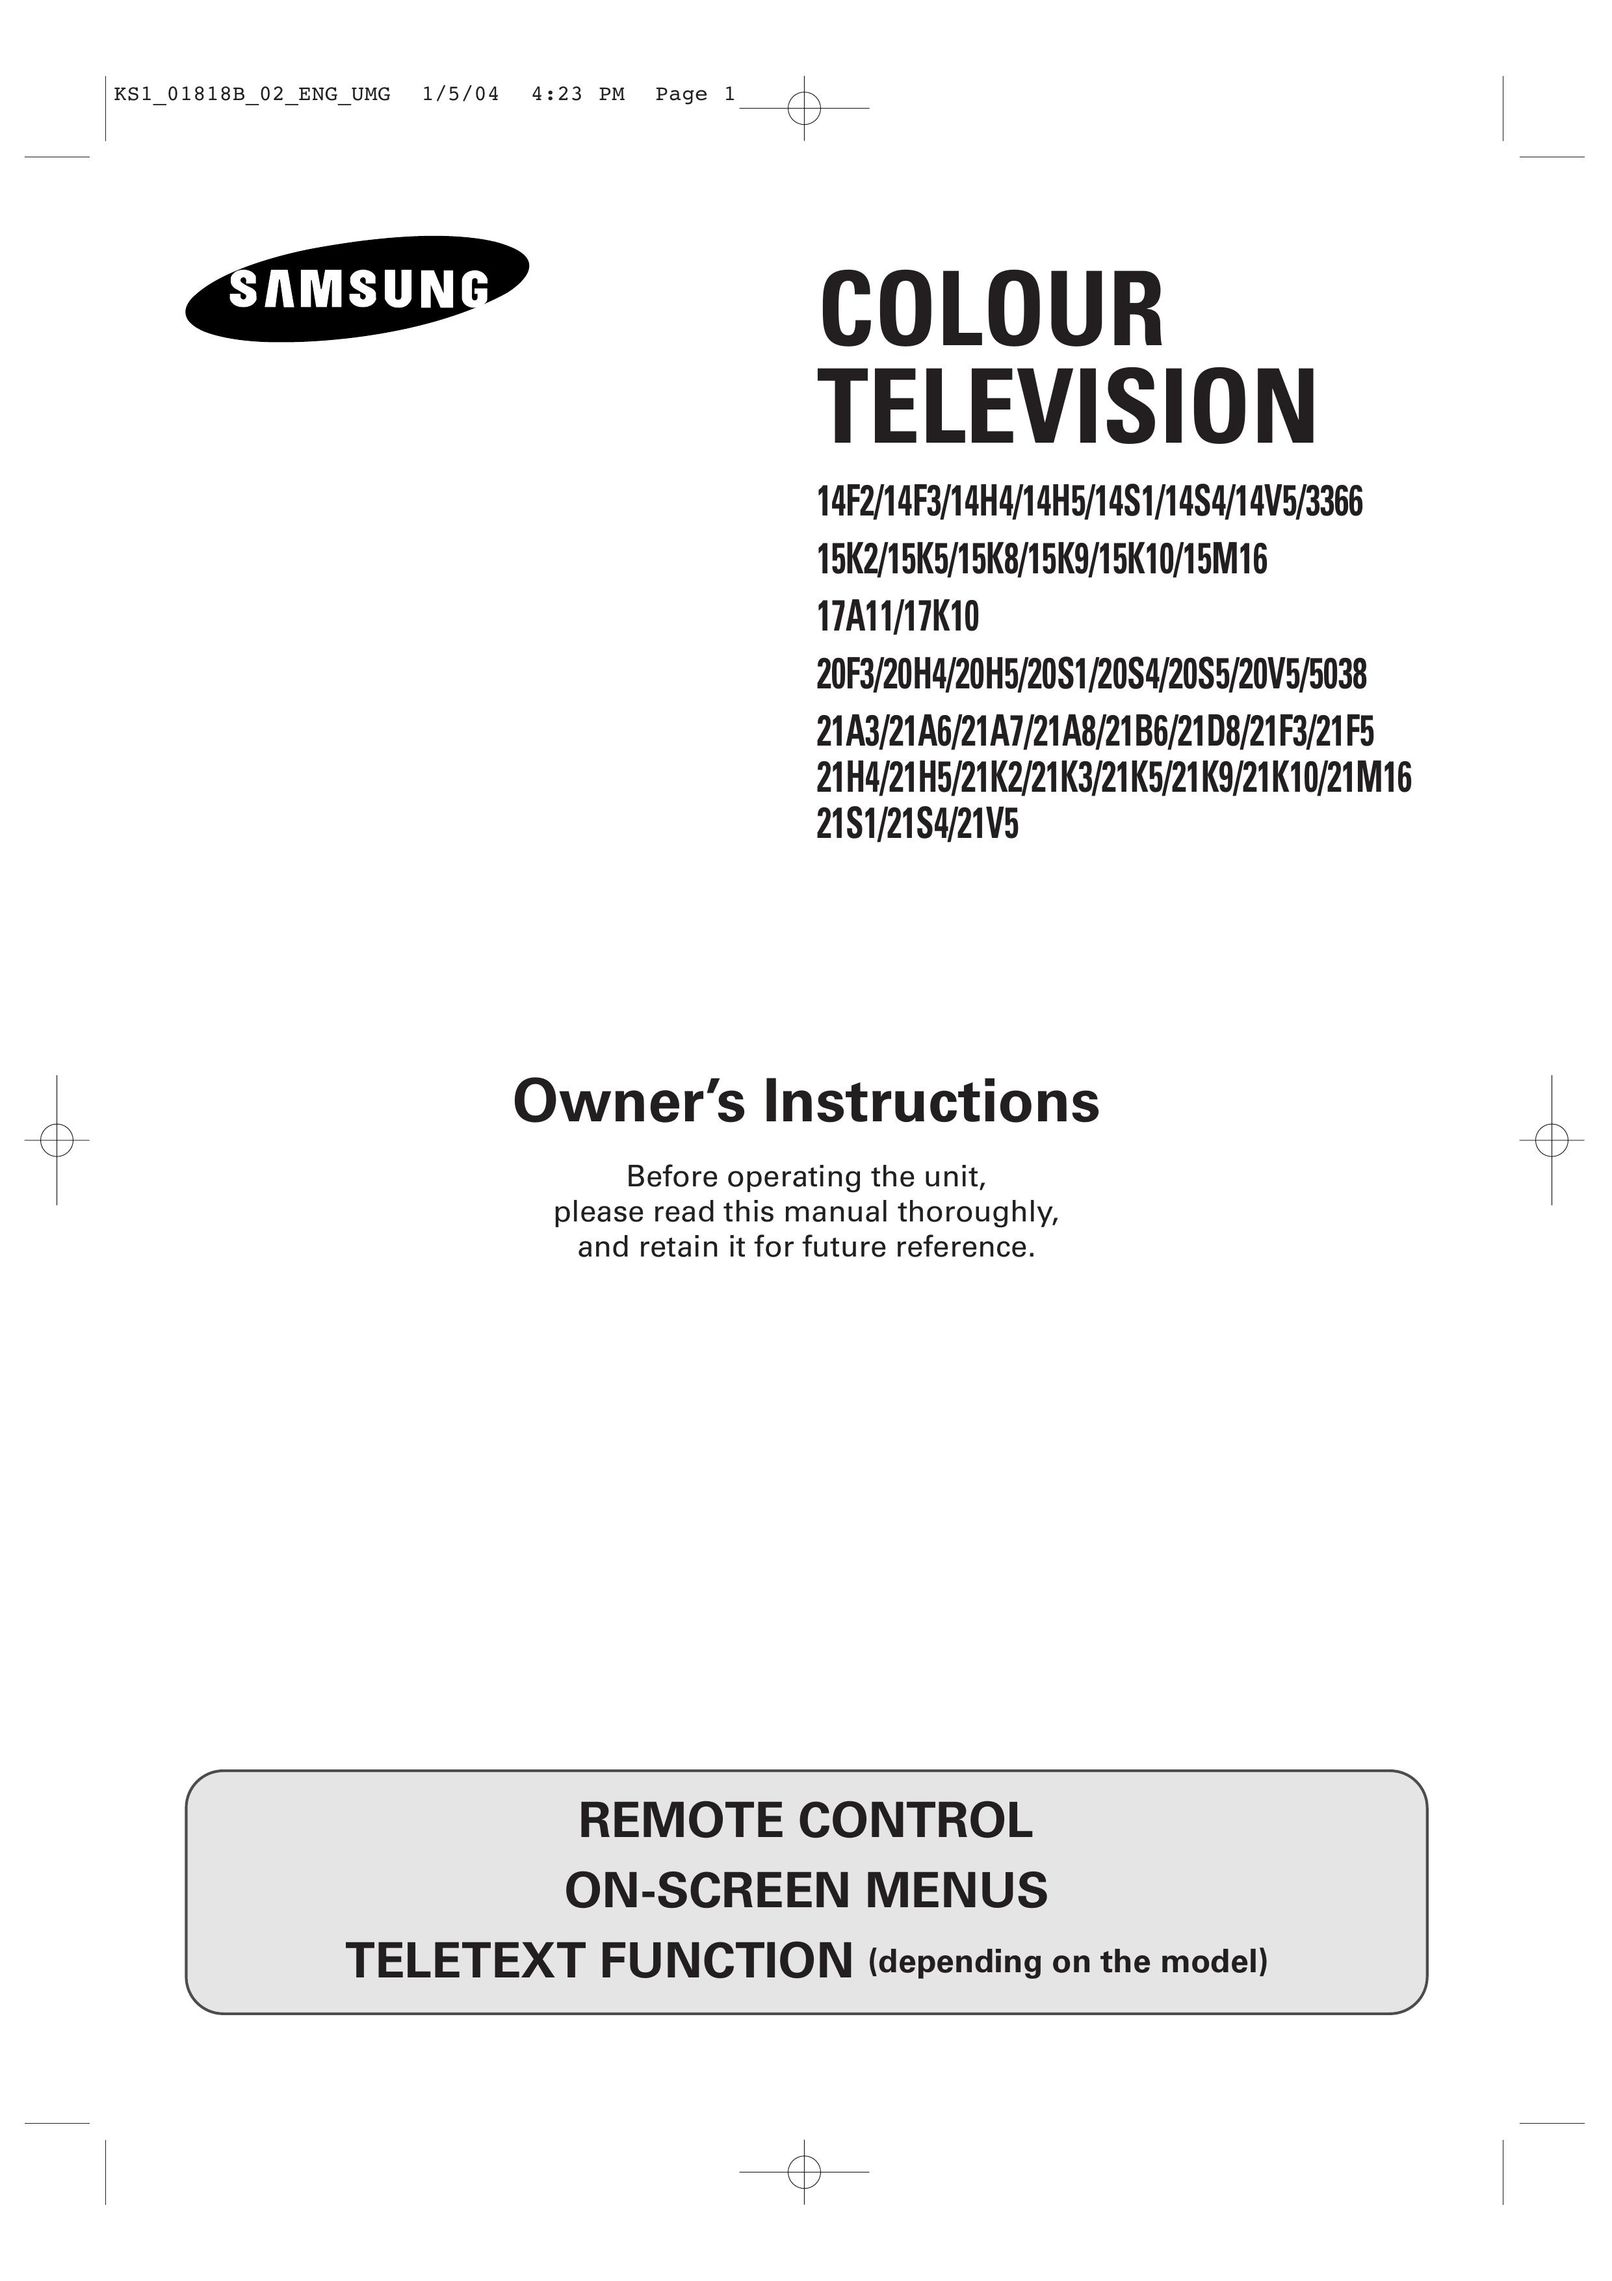 Samsung 21K10 CRT Television User Manual